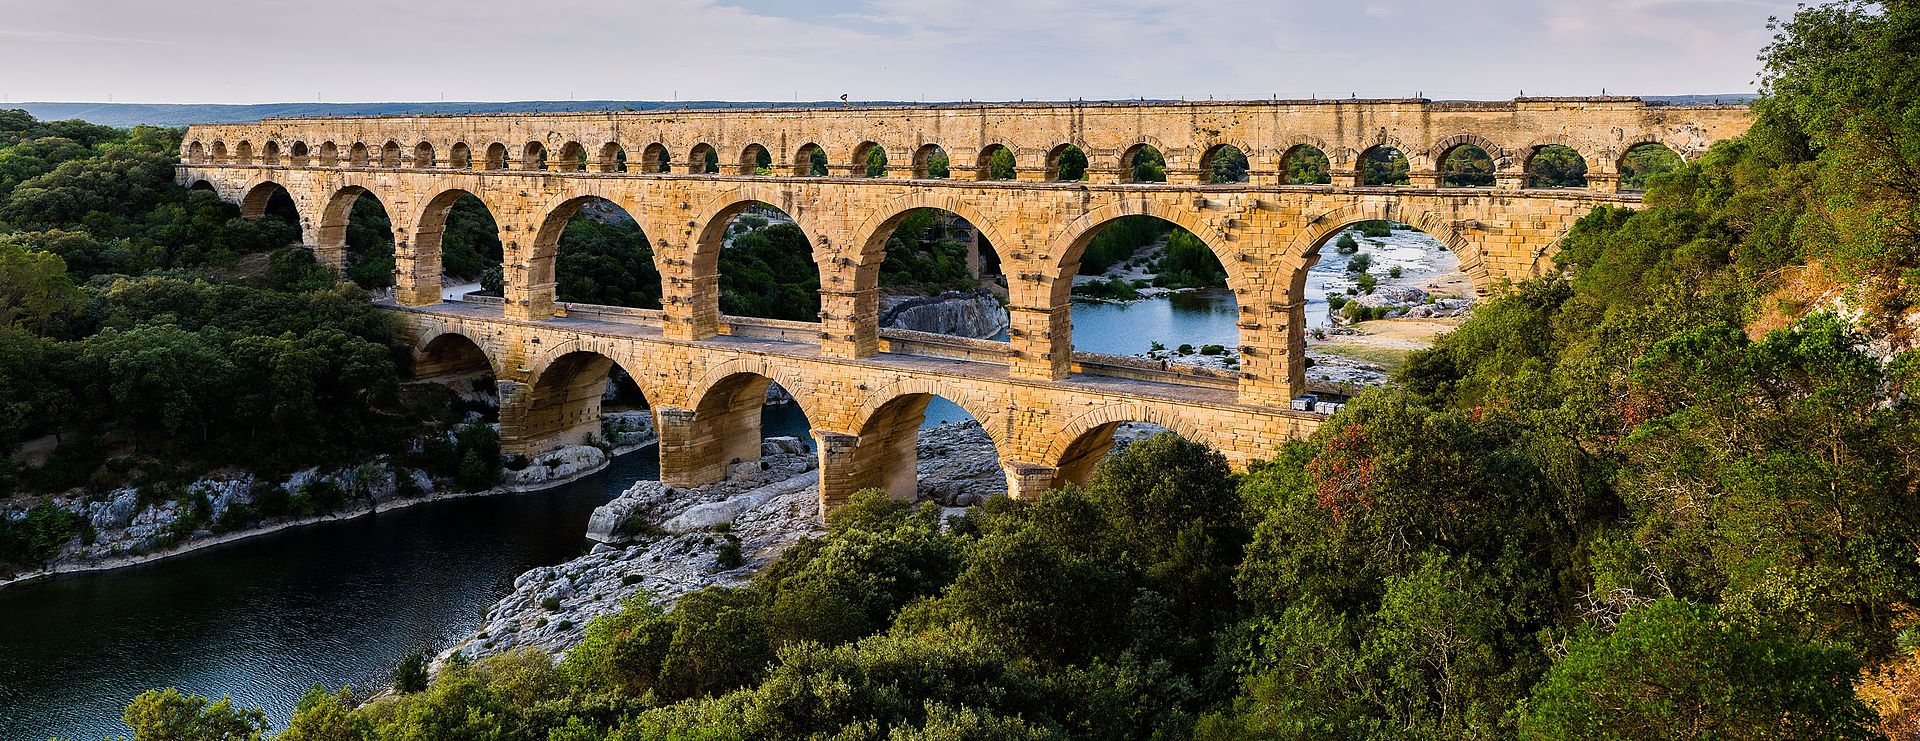 Pont du Gard aqueduct in Roman Gaul